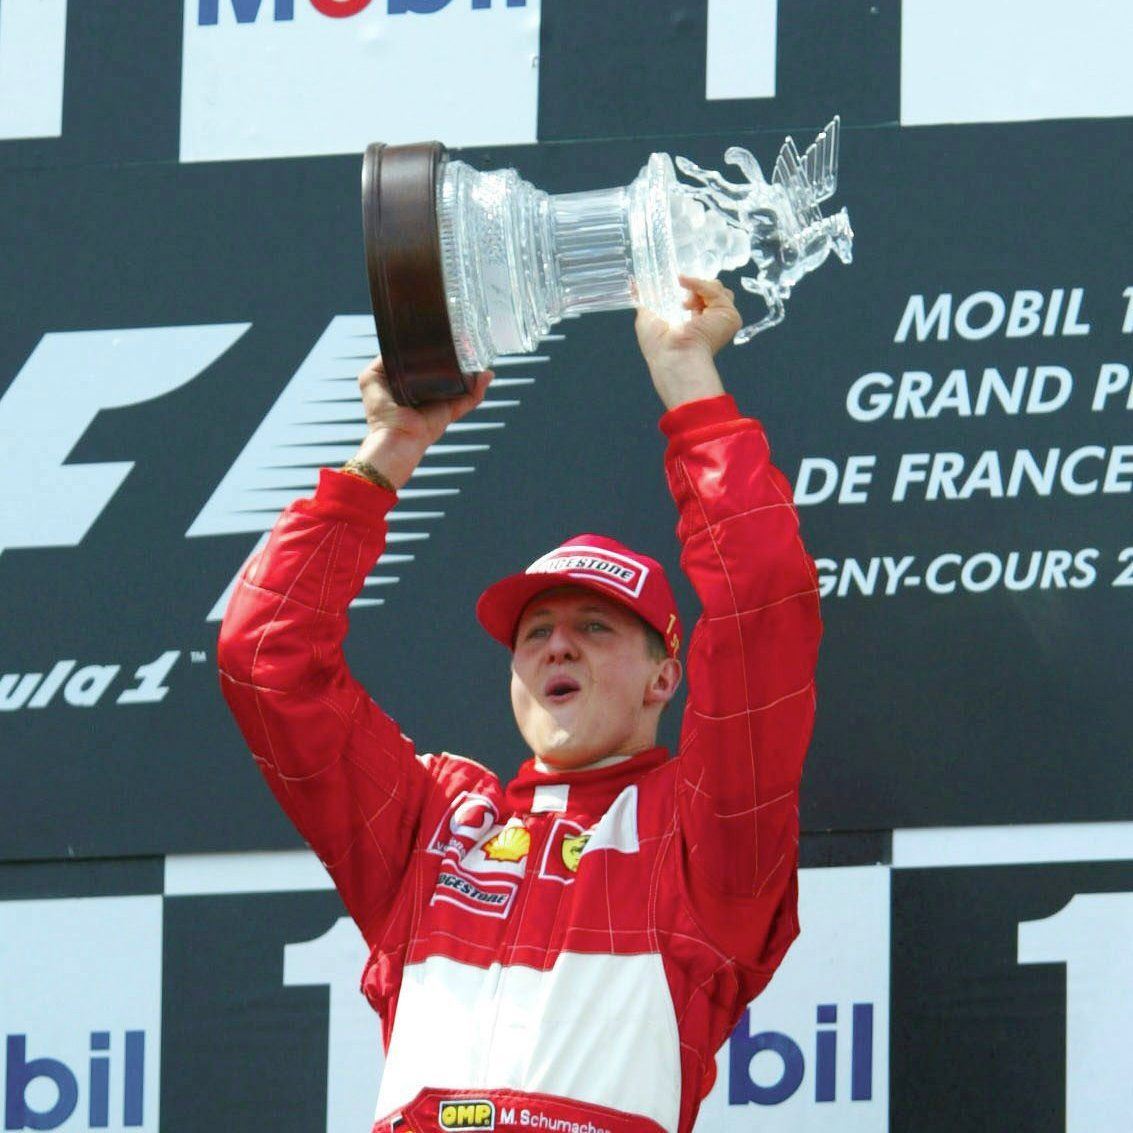 Michael Schumacher ‘in best of hands’, still watches F1 races, says friend Jean Todt